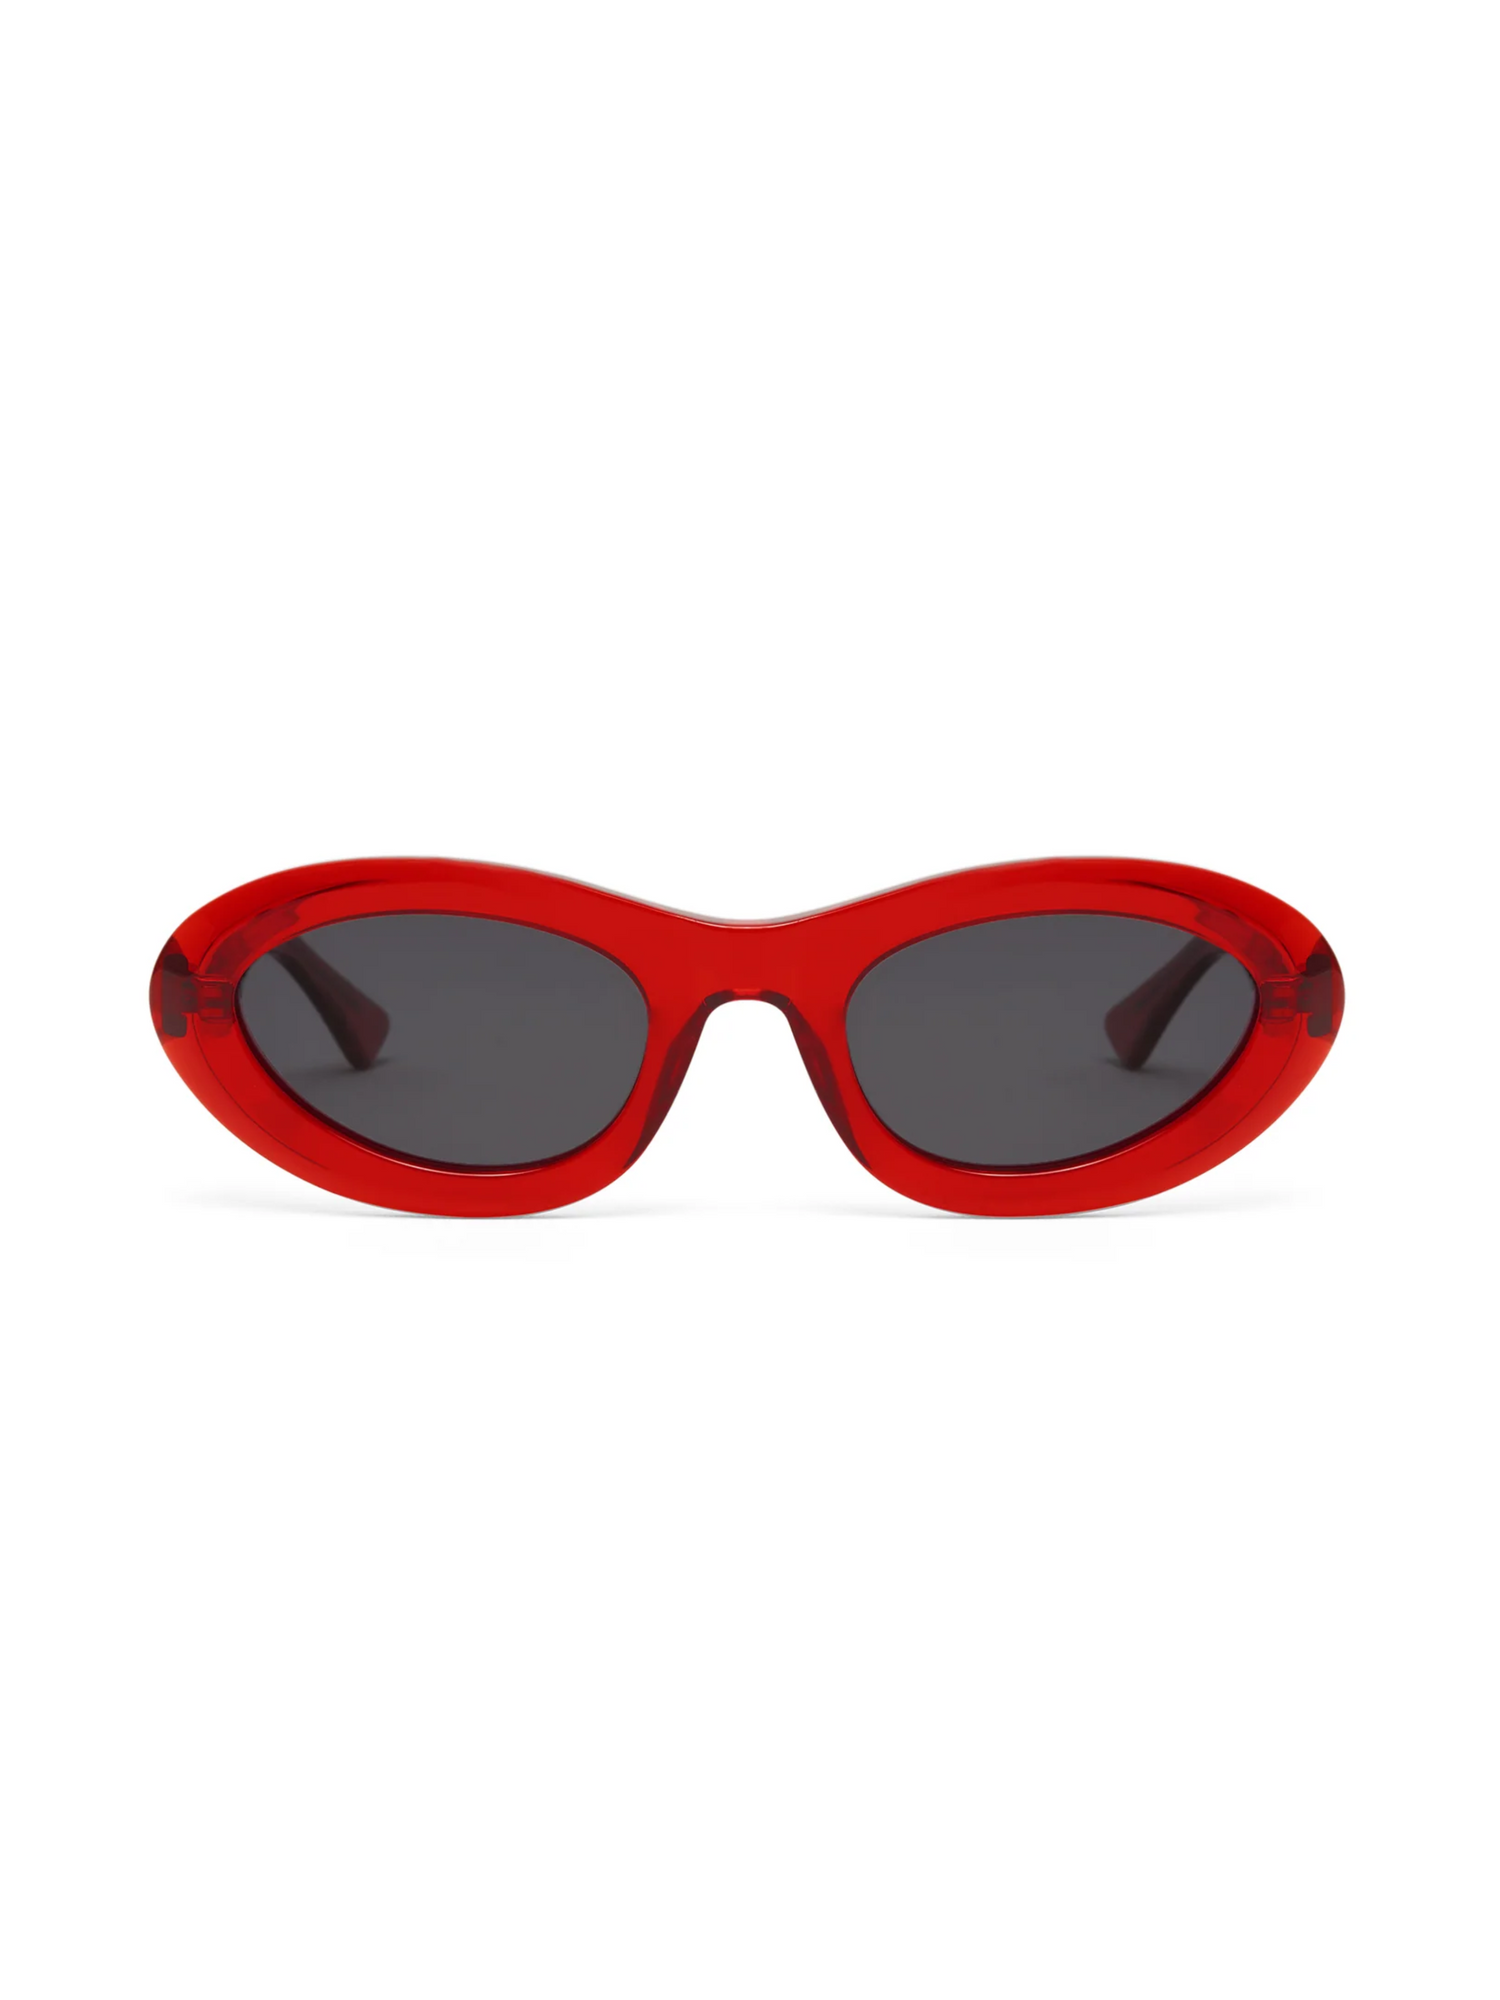 red retro polarized sunglasses